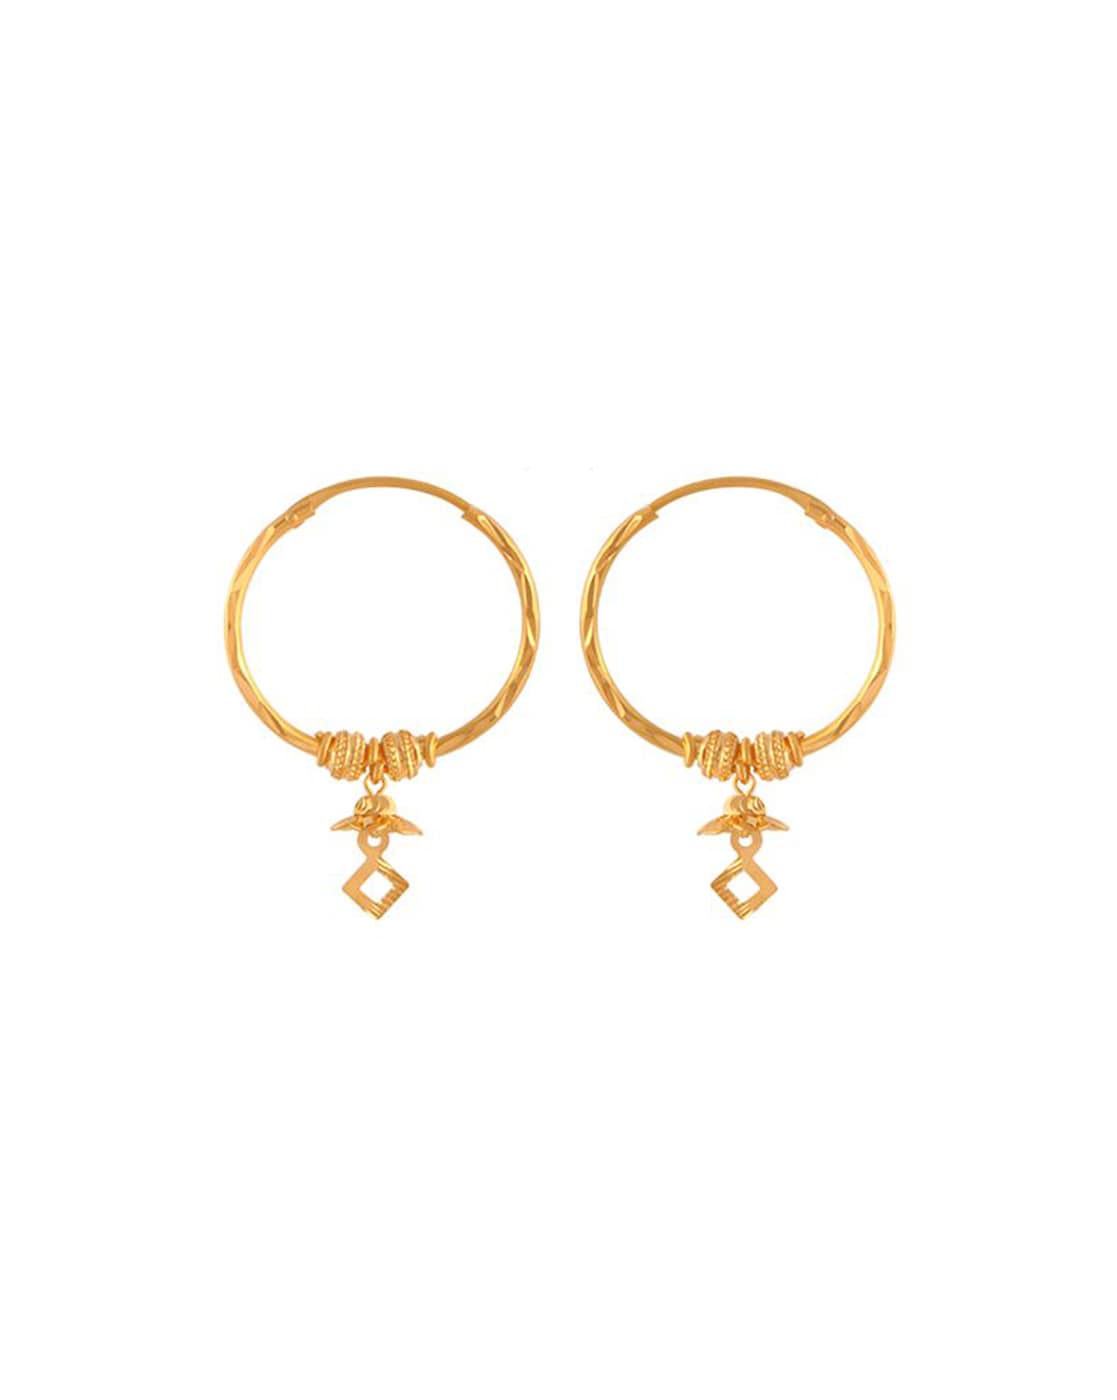 Gold Earrings Leaf Design - South India Jewels